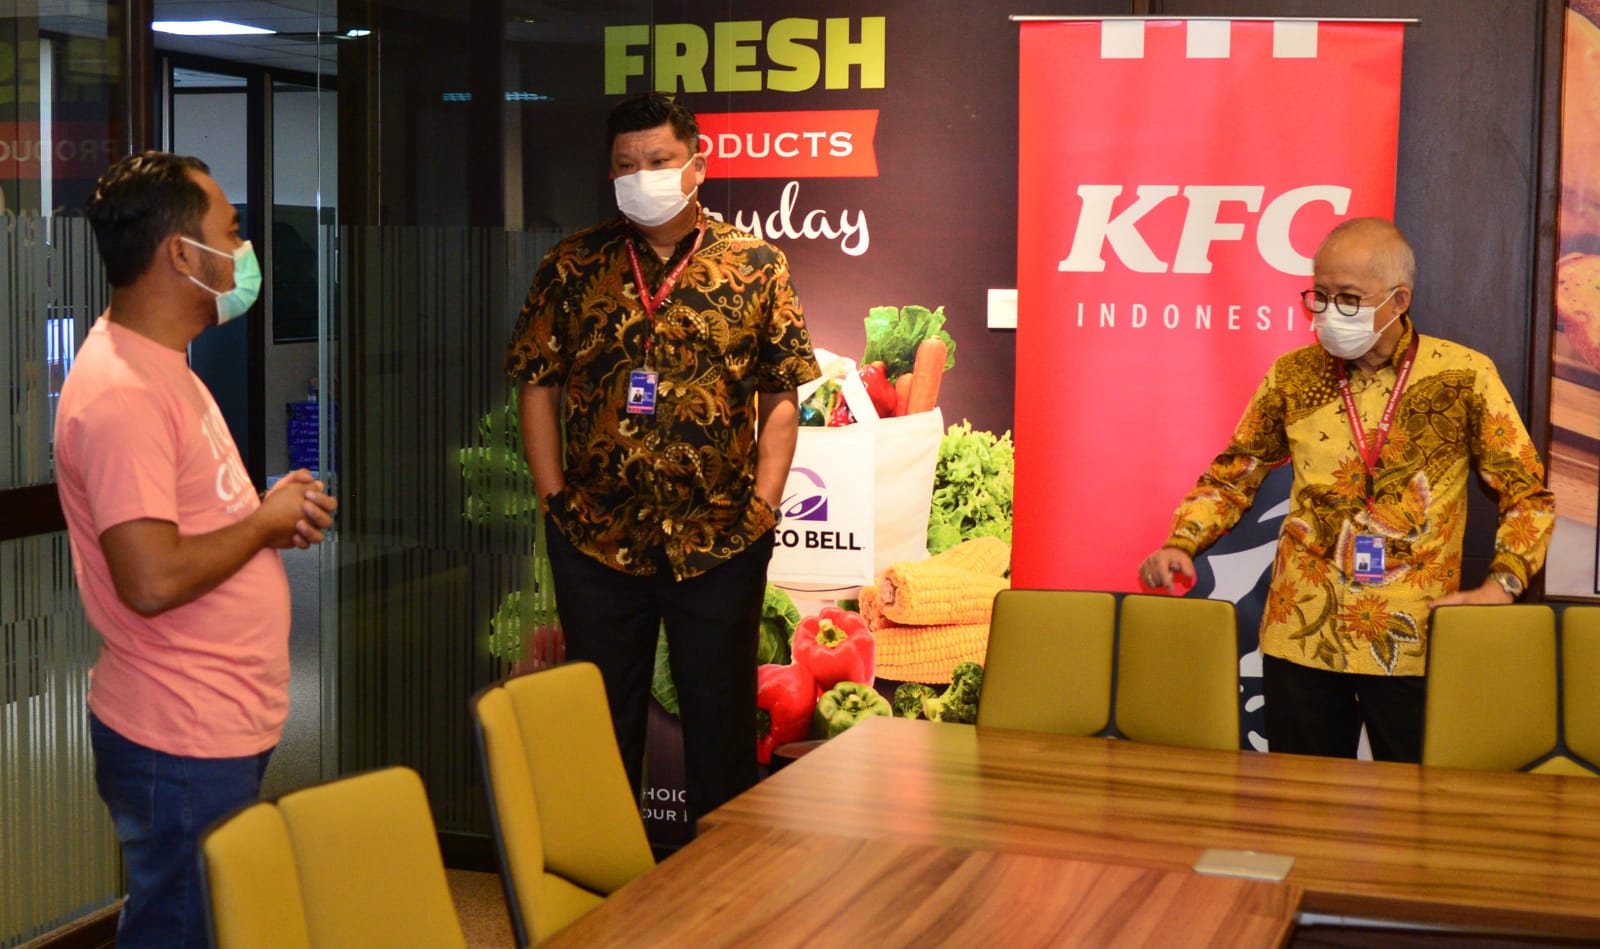 KFC Indonesia Serahkan Donasi Hasil Program Bucket For Given, Bucket For Good Kepada Yayasan 1000 Guru